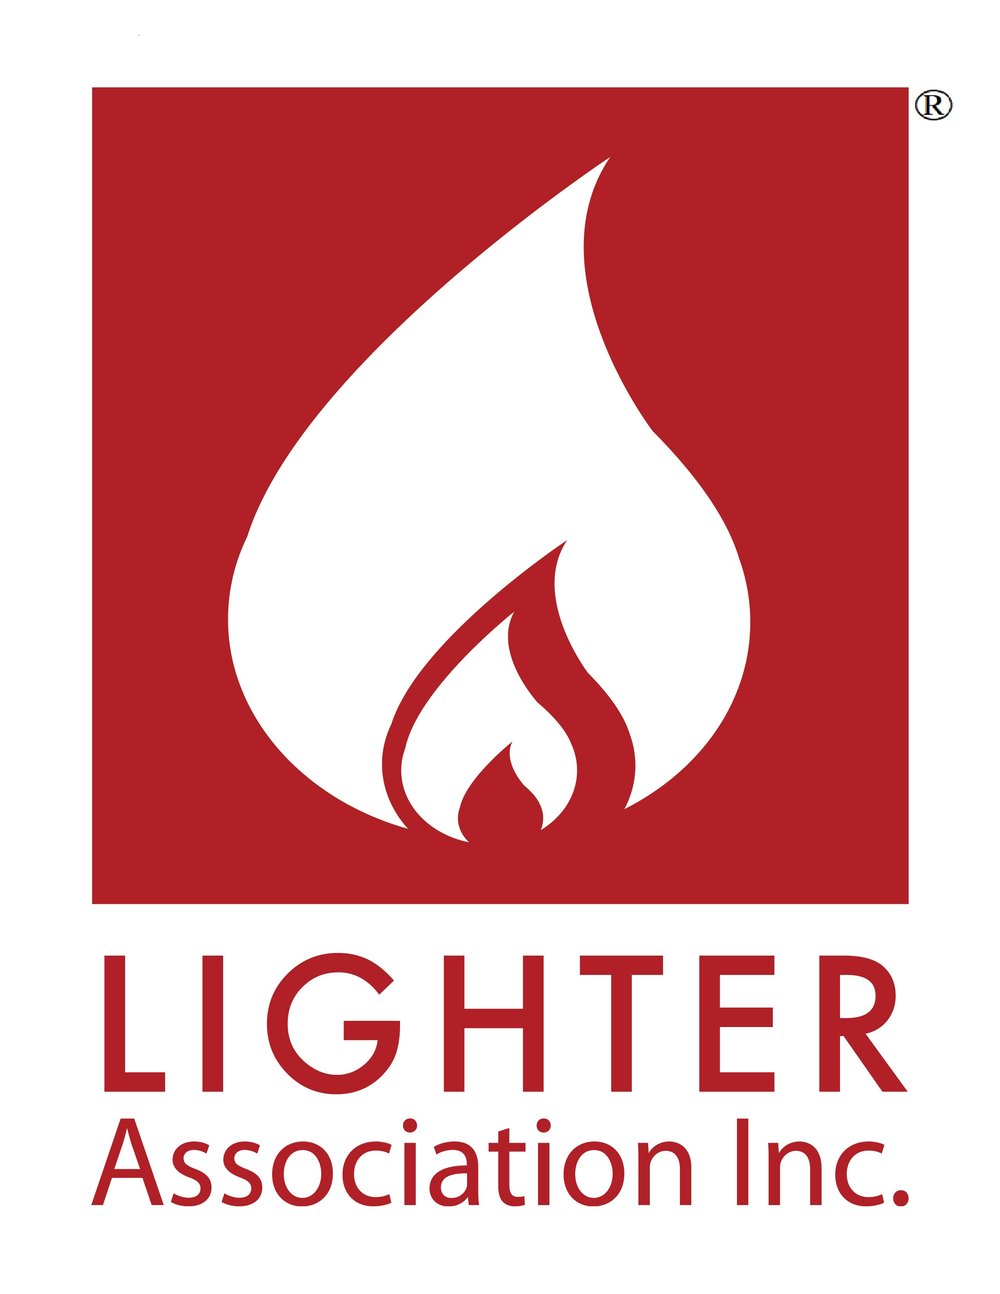 Lighter Association Inc.